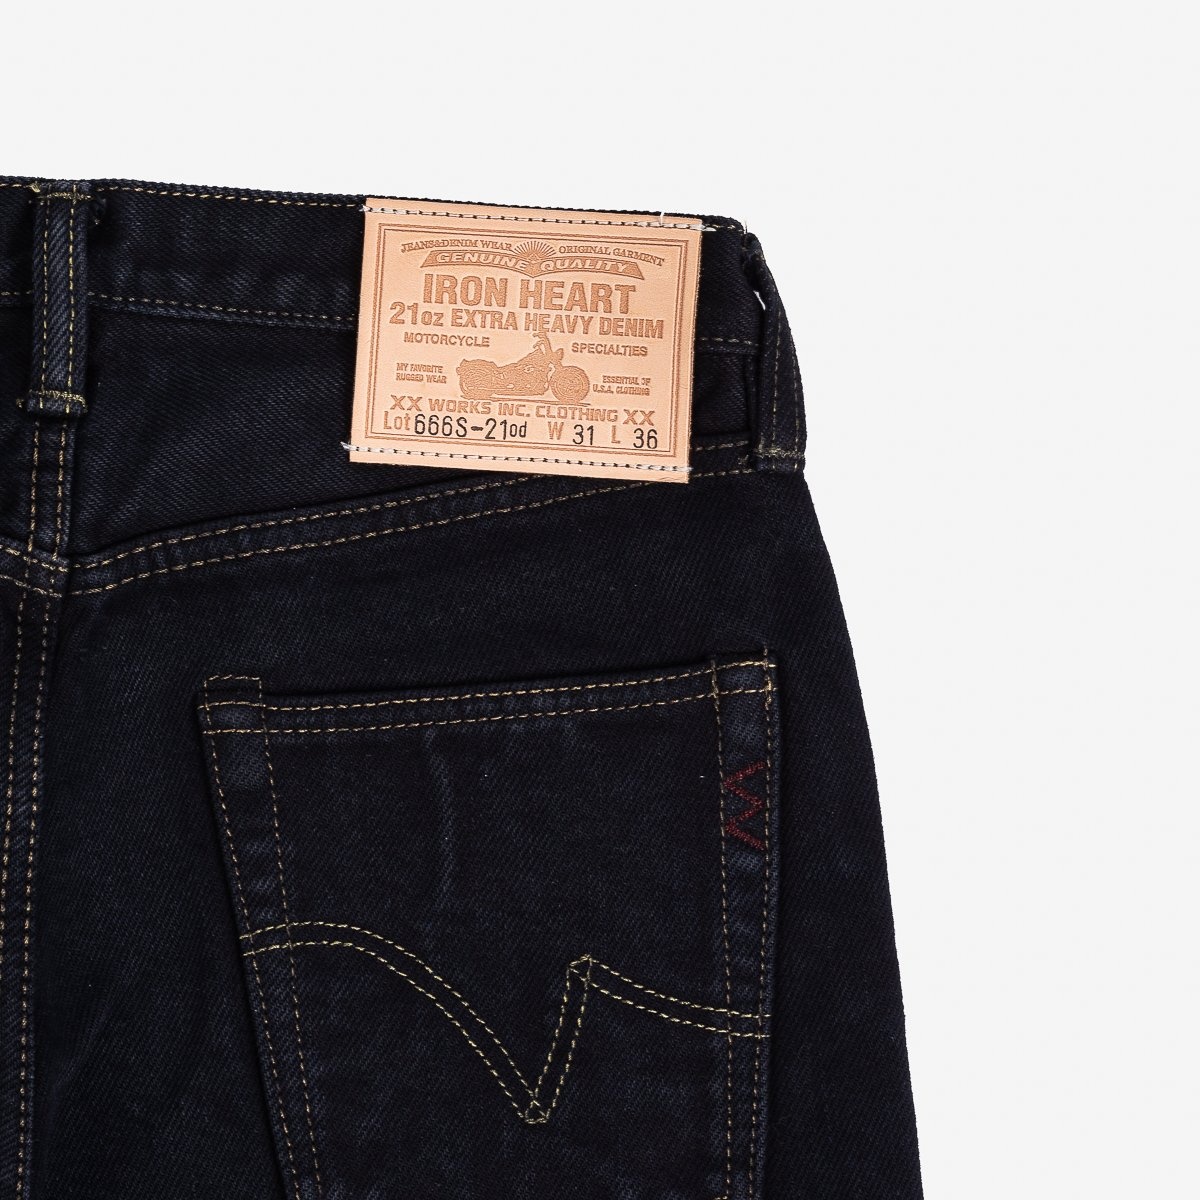 IH-666S-21od 21oz Selvedge Denim Slim Straight Cut Jeans - Indigo Overdyed Black - 7